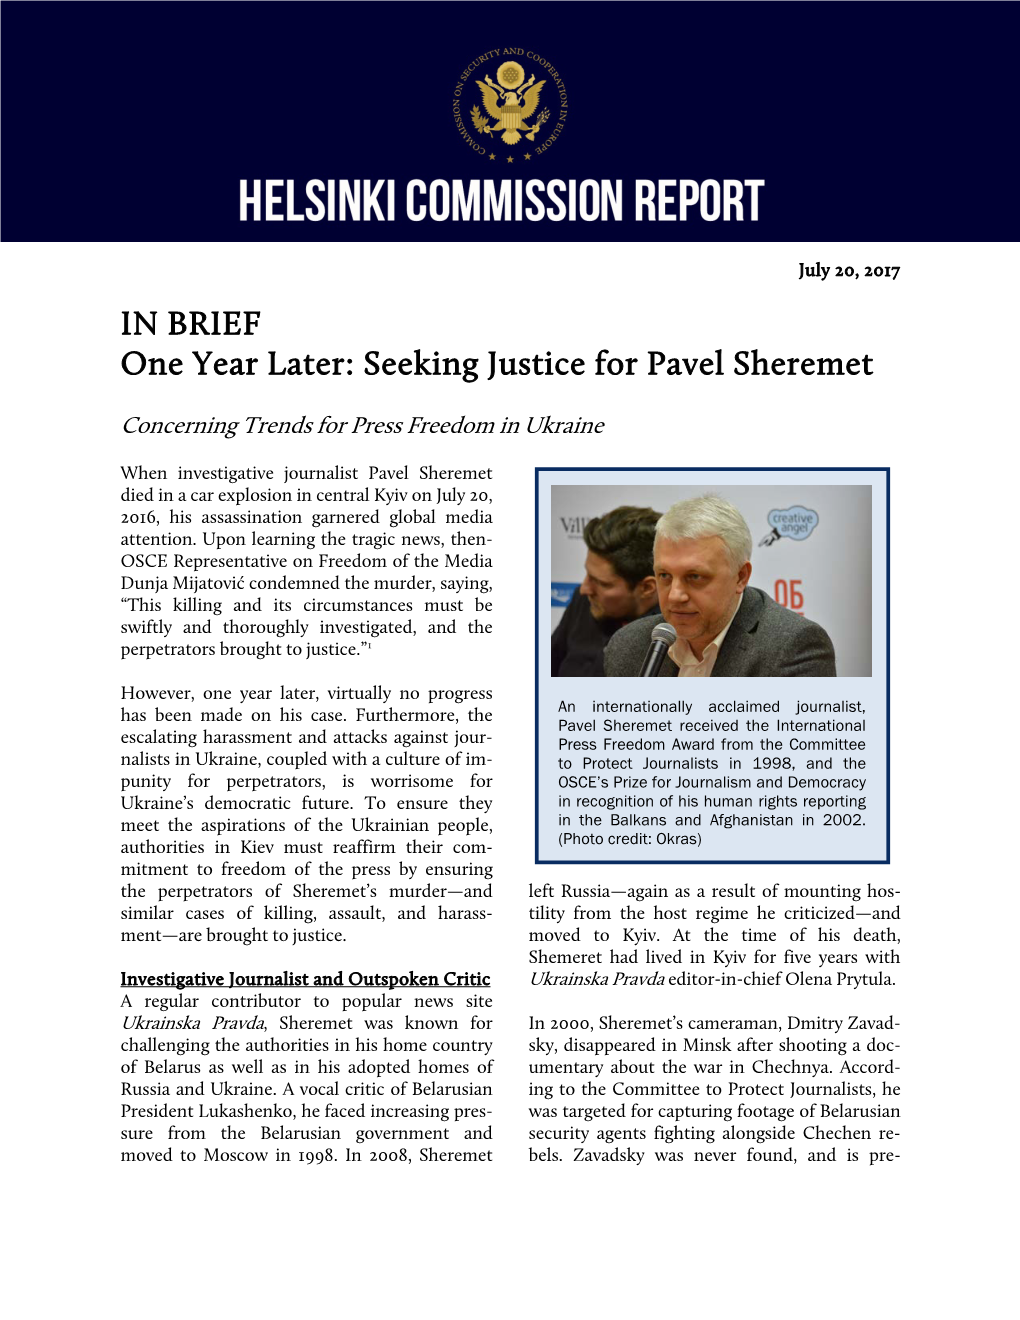 Seeking Justice for Pavel Sheremet